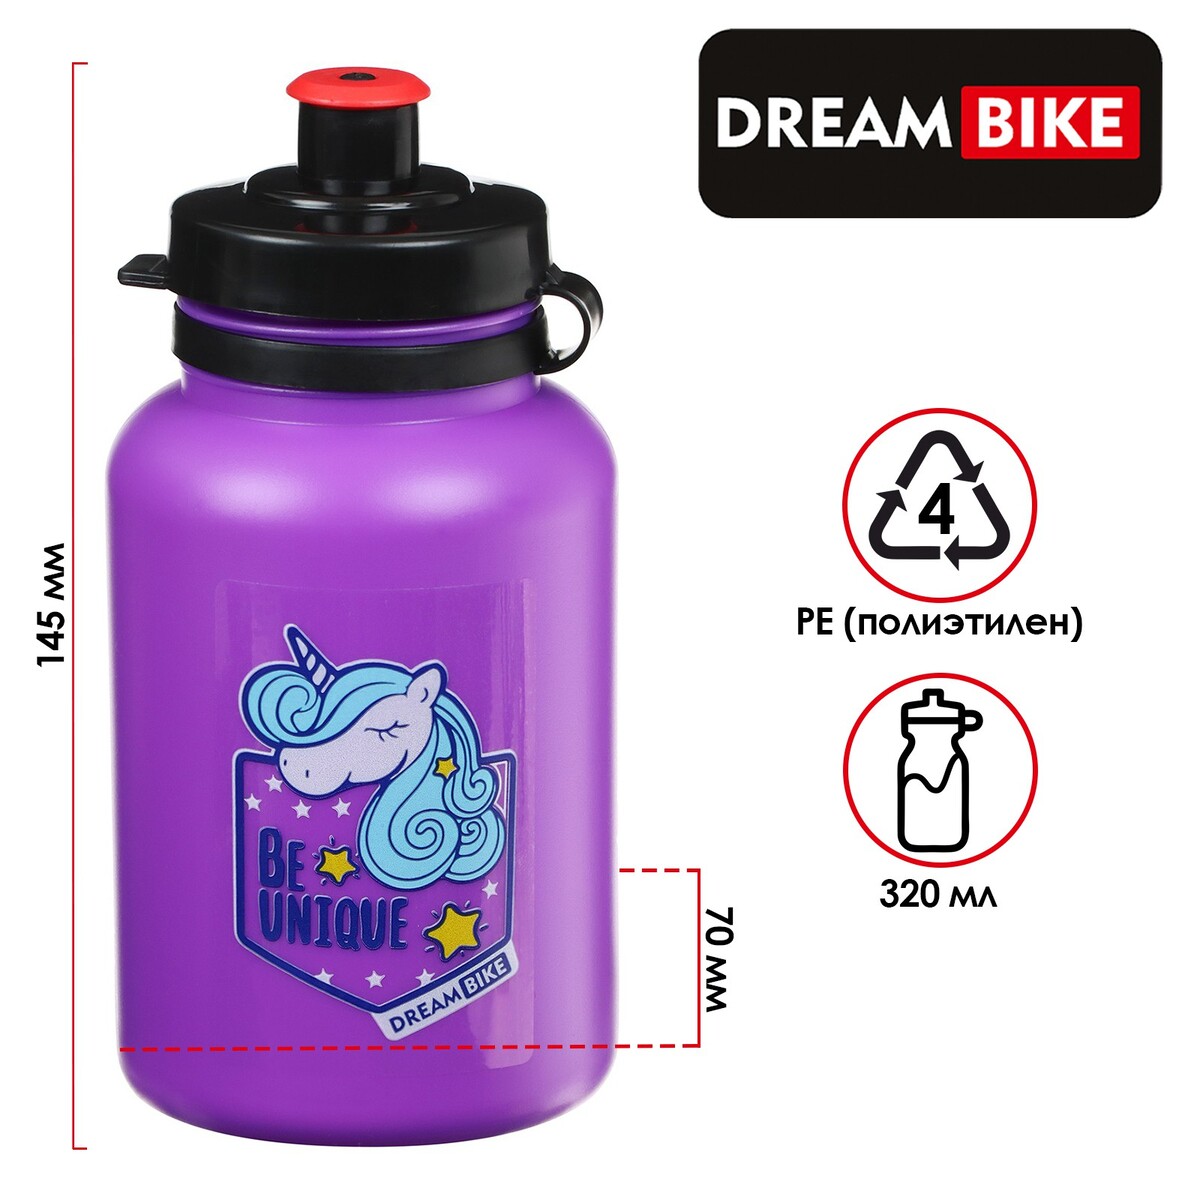 Велофляга dream bike, с флягодержателем, 320 мл, цвет фиолетовый велофляга stg с флягодержателем х95401